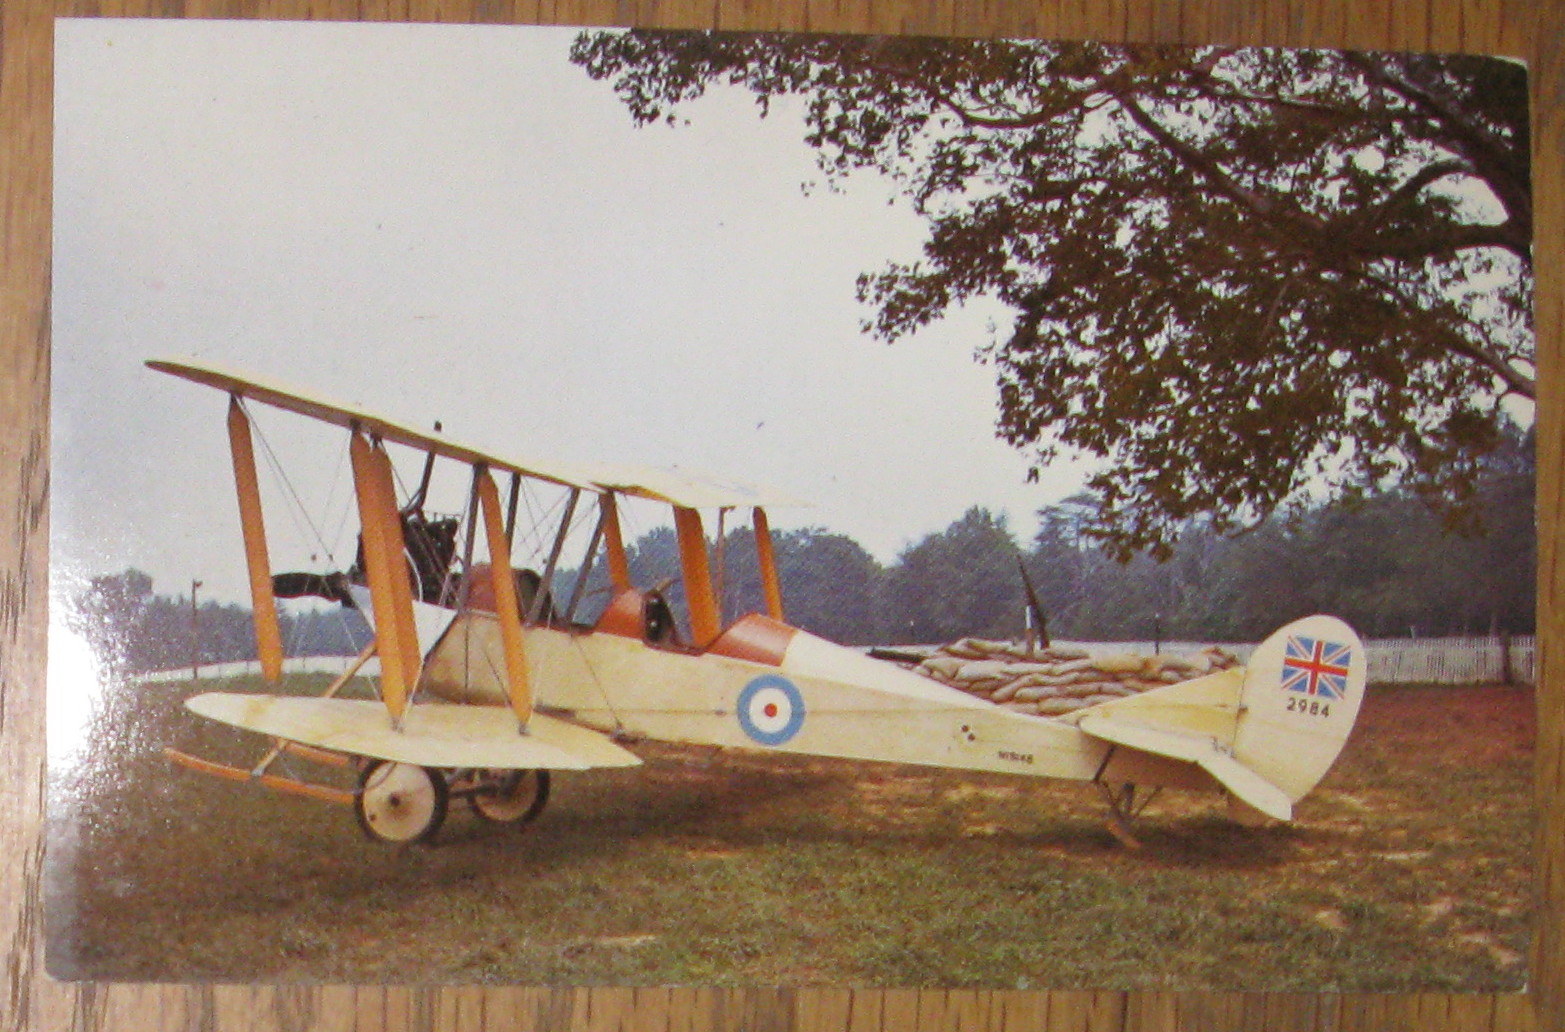 BE.2c Flying Circus Aerodrome Virginia